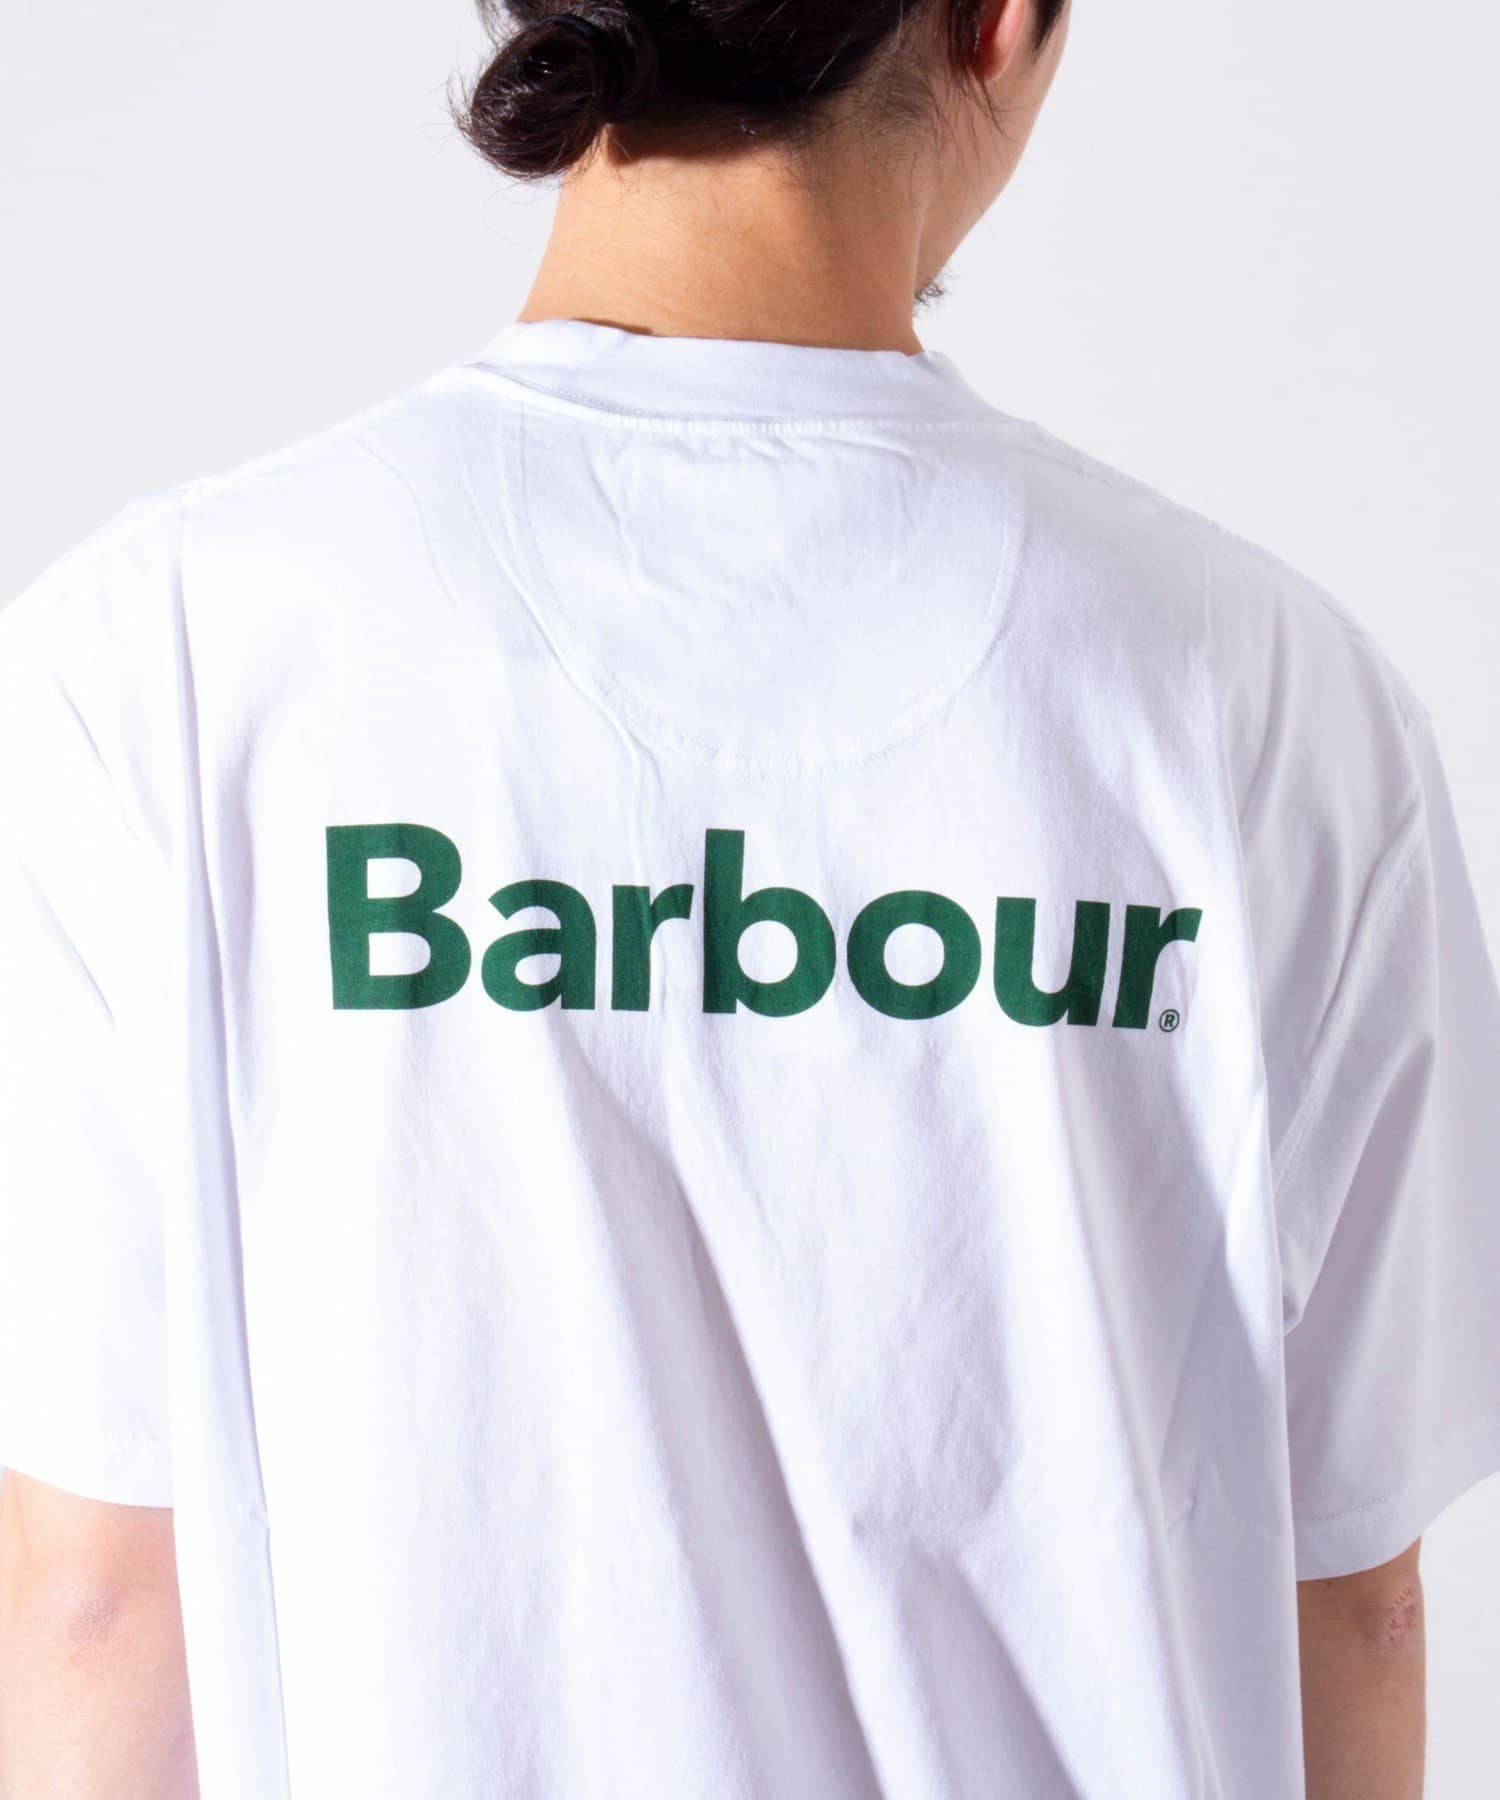 FREDY & GLOSTER(フレディ アンド グロスター) 【Barbour】Strowell ロゴ バックプリント Tシャツ